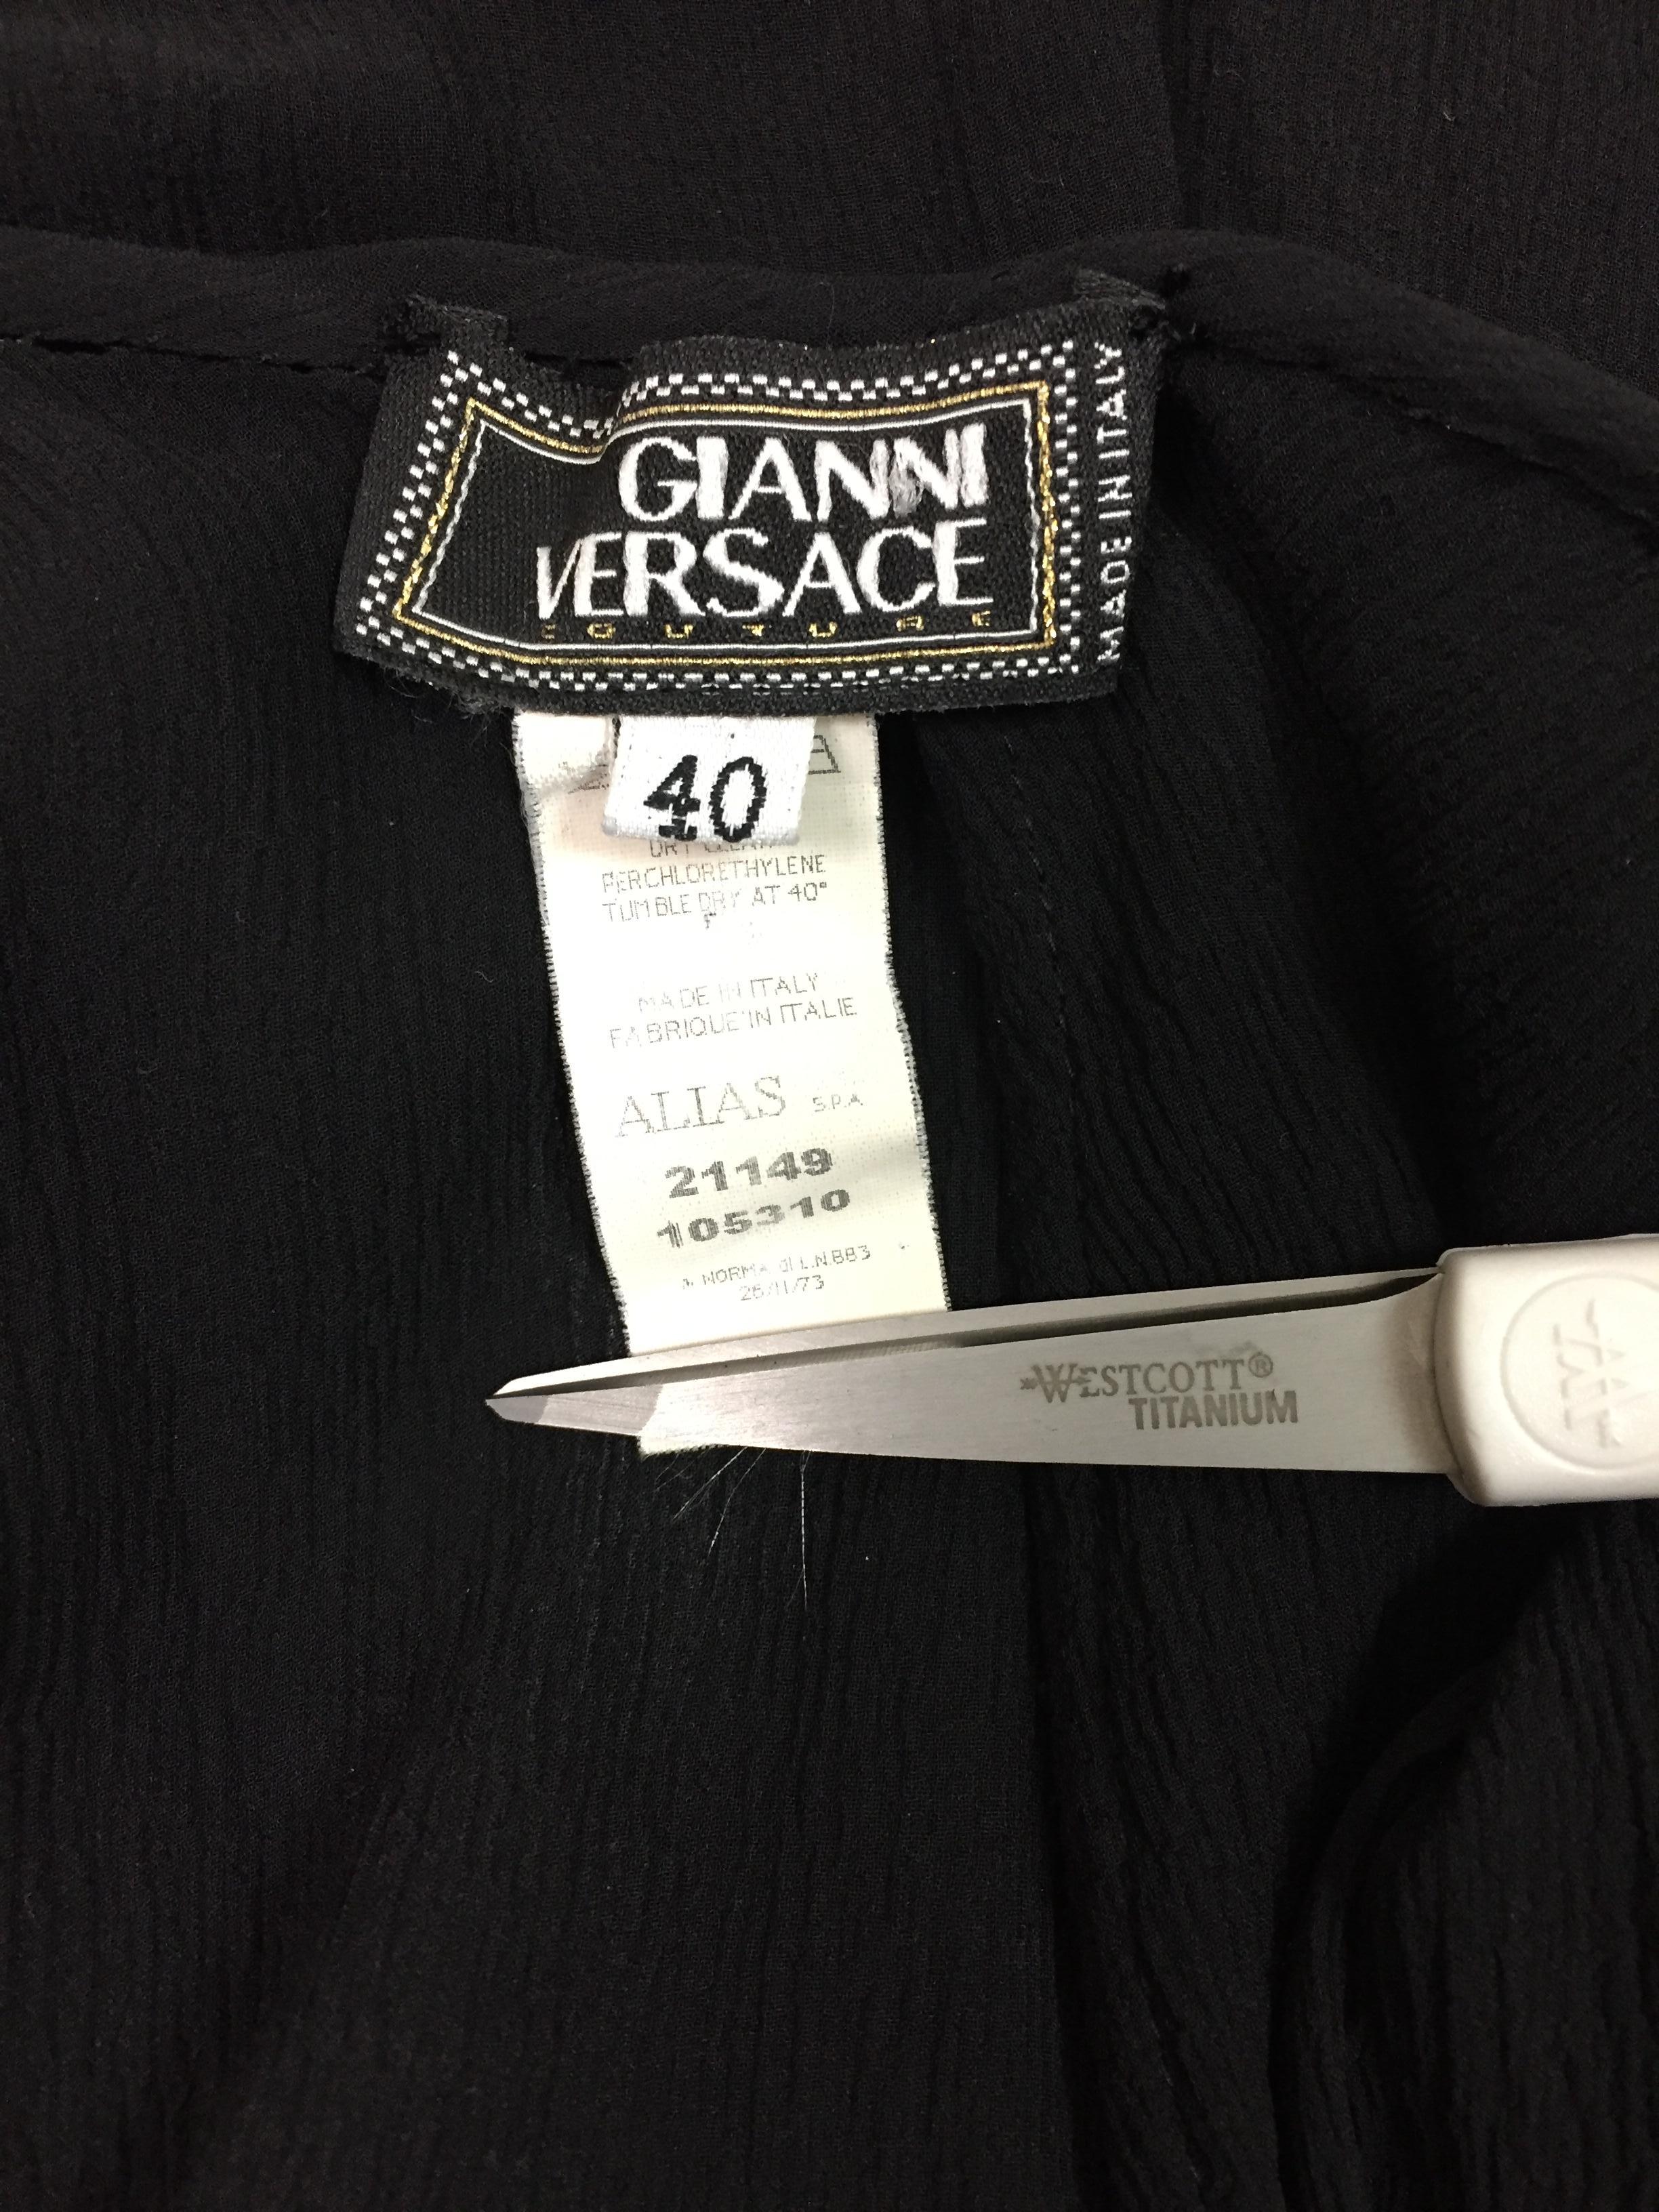 C. 2000 Gianni Versace Sheer Black Silk Plunging Grecian Gown Dress In Good Condition In Yukon, OK